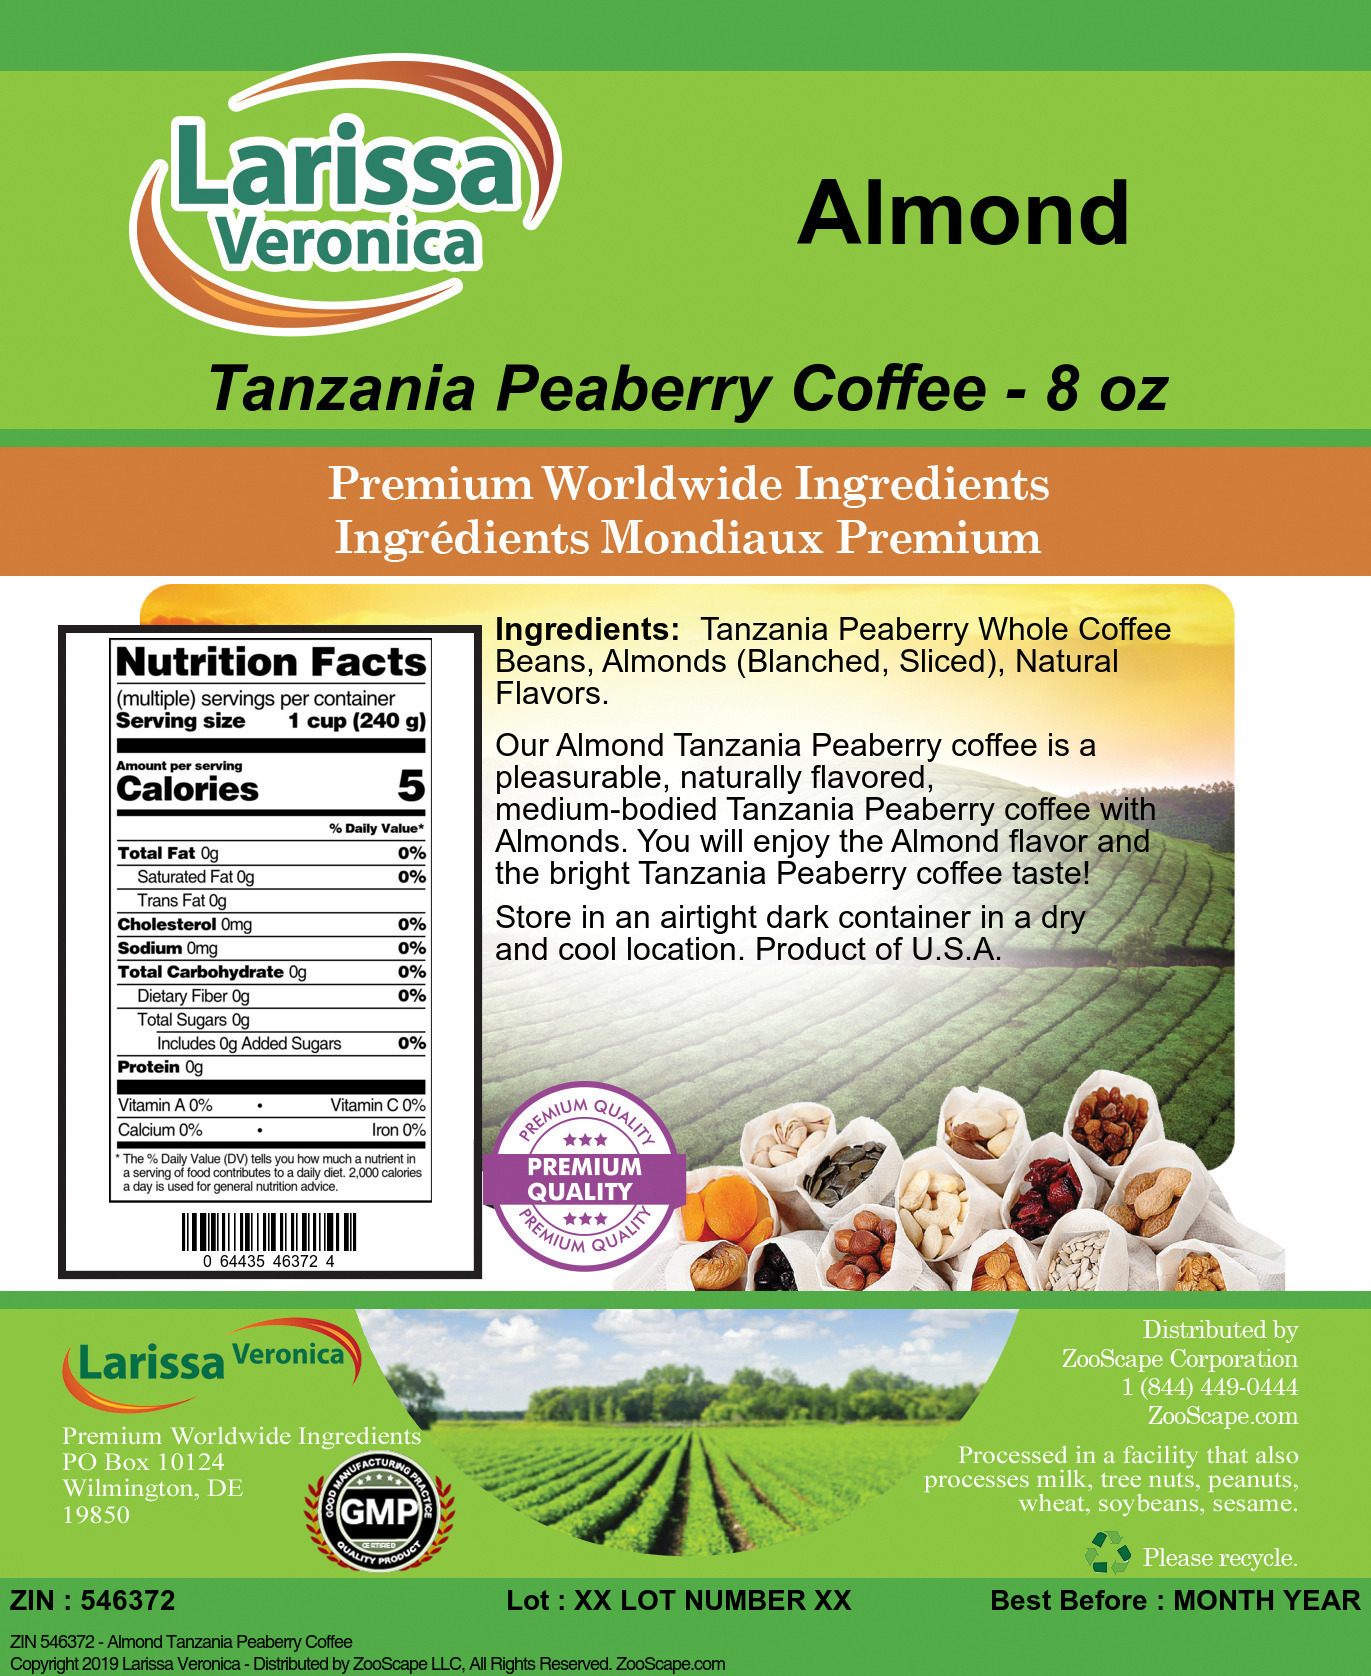 Almond Tanzania Peaberry Coffee - Label